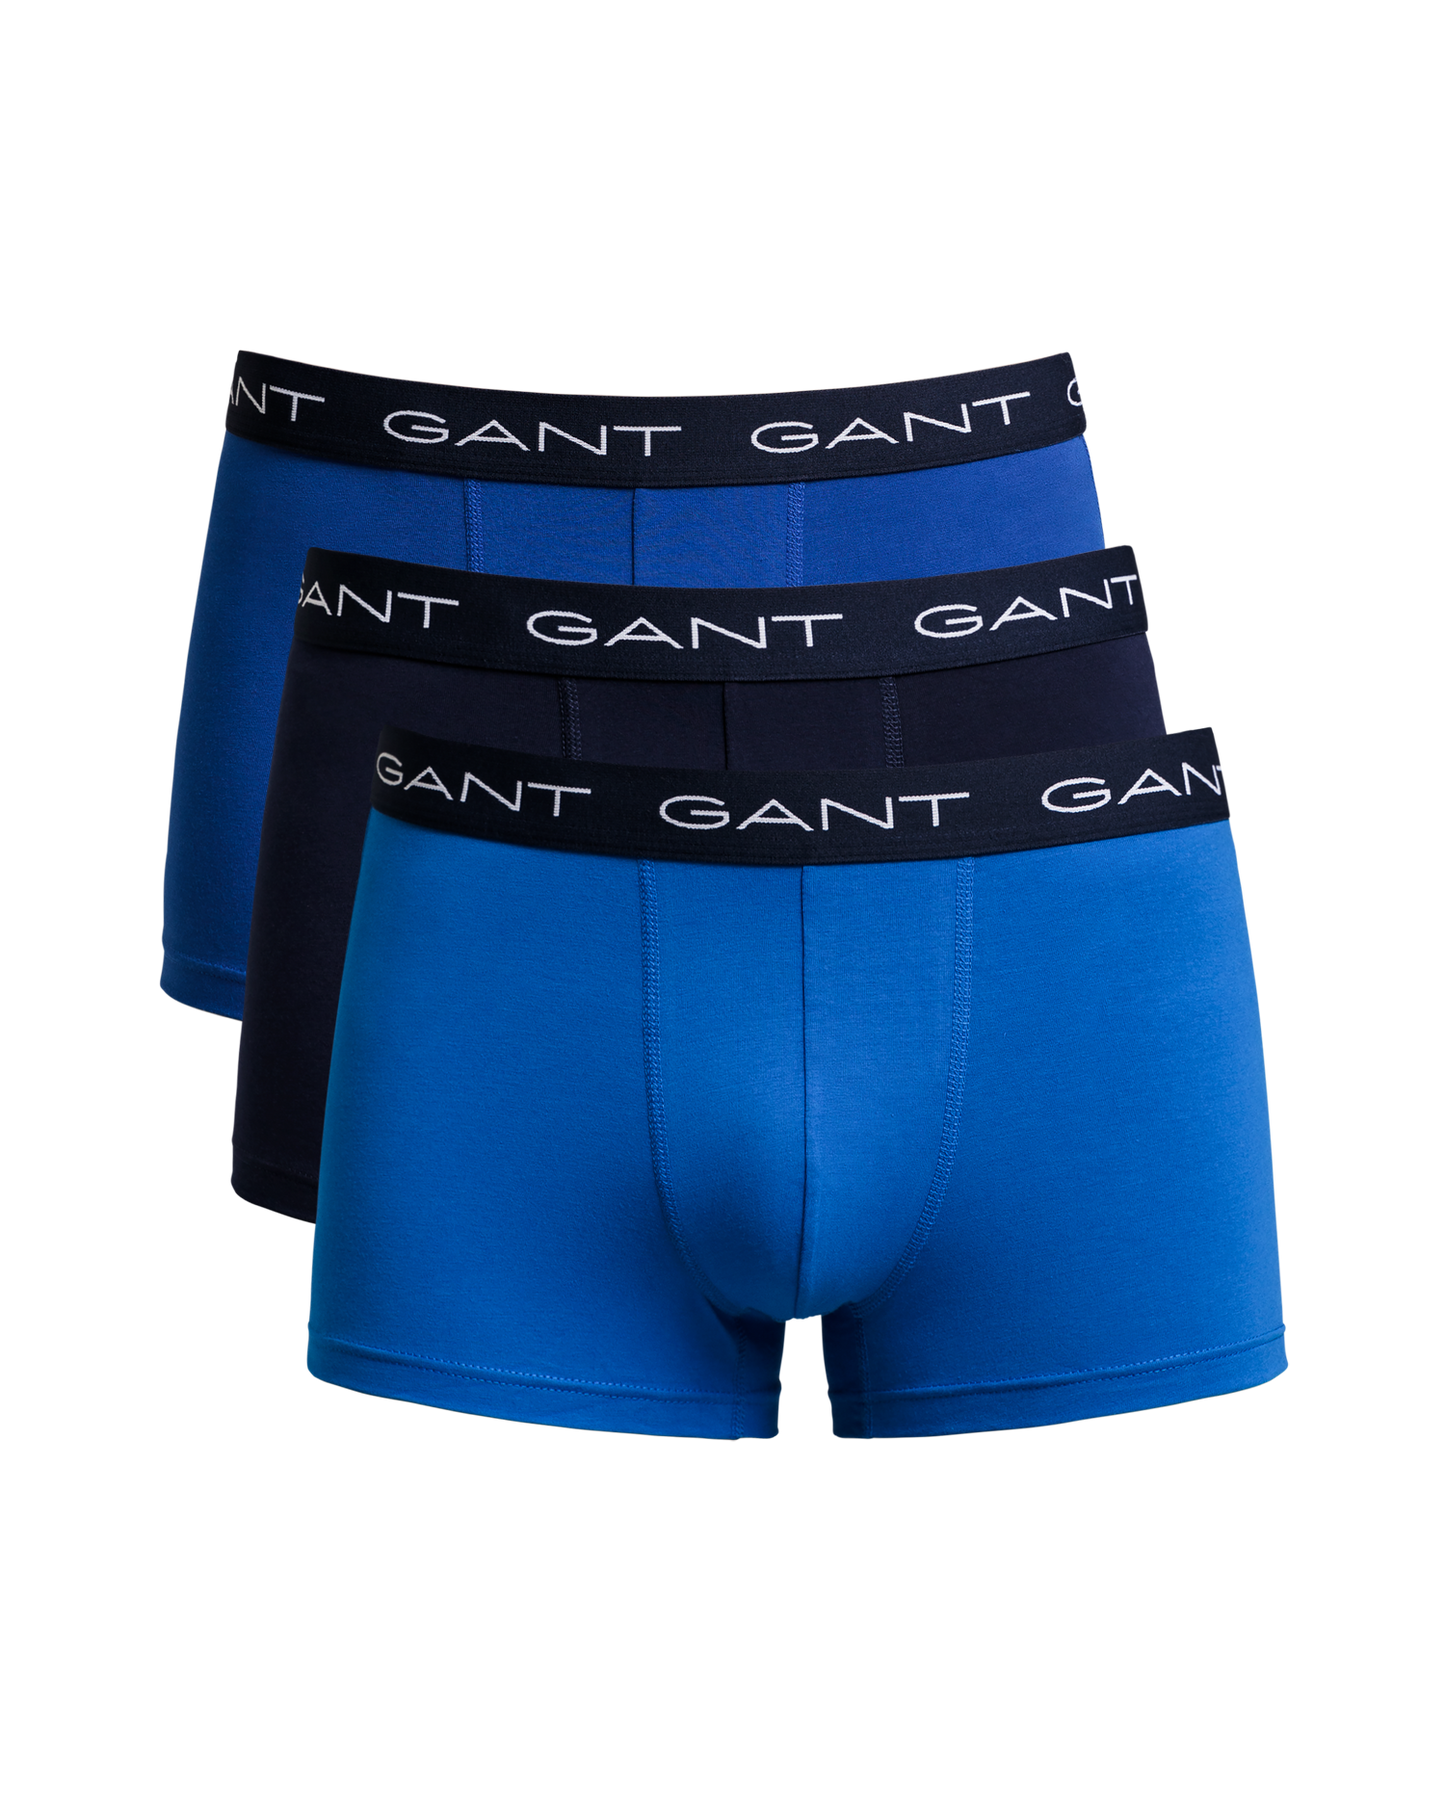 Gant Underwear in regular Classic fit.   The Trunk 3-Pack      , chosen in a Nautical Blue colour